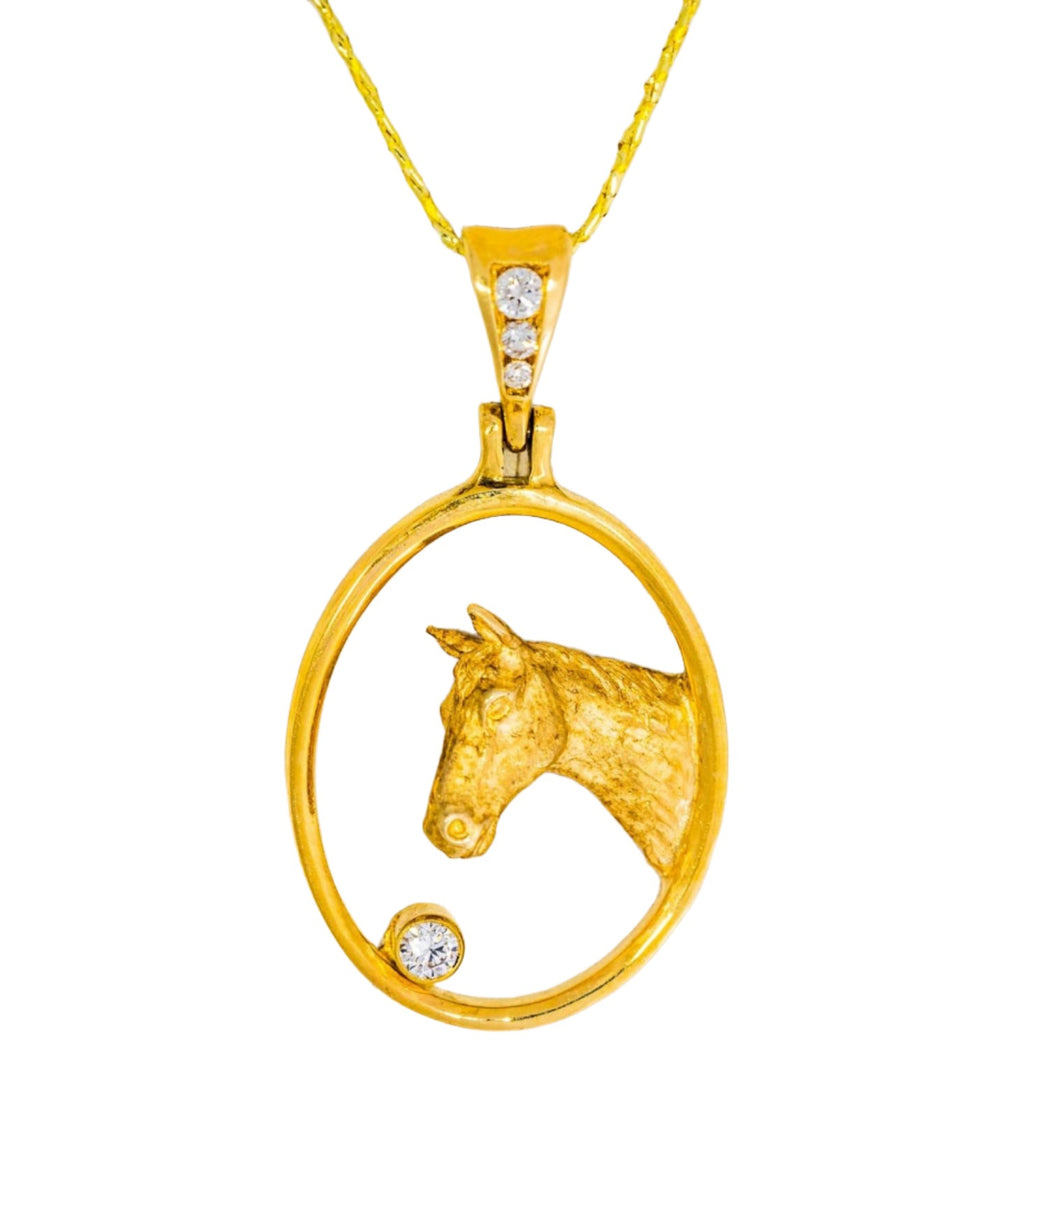 Gold Horse Pendant by Paul Iwanaga